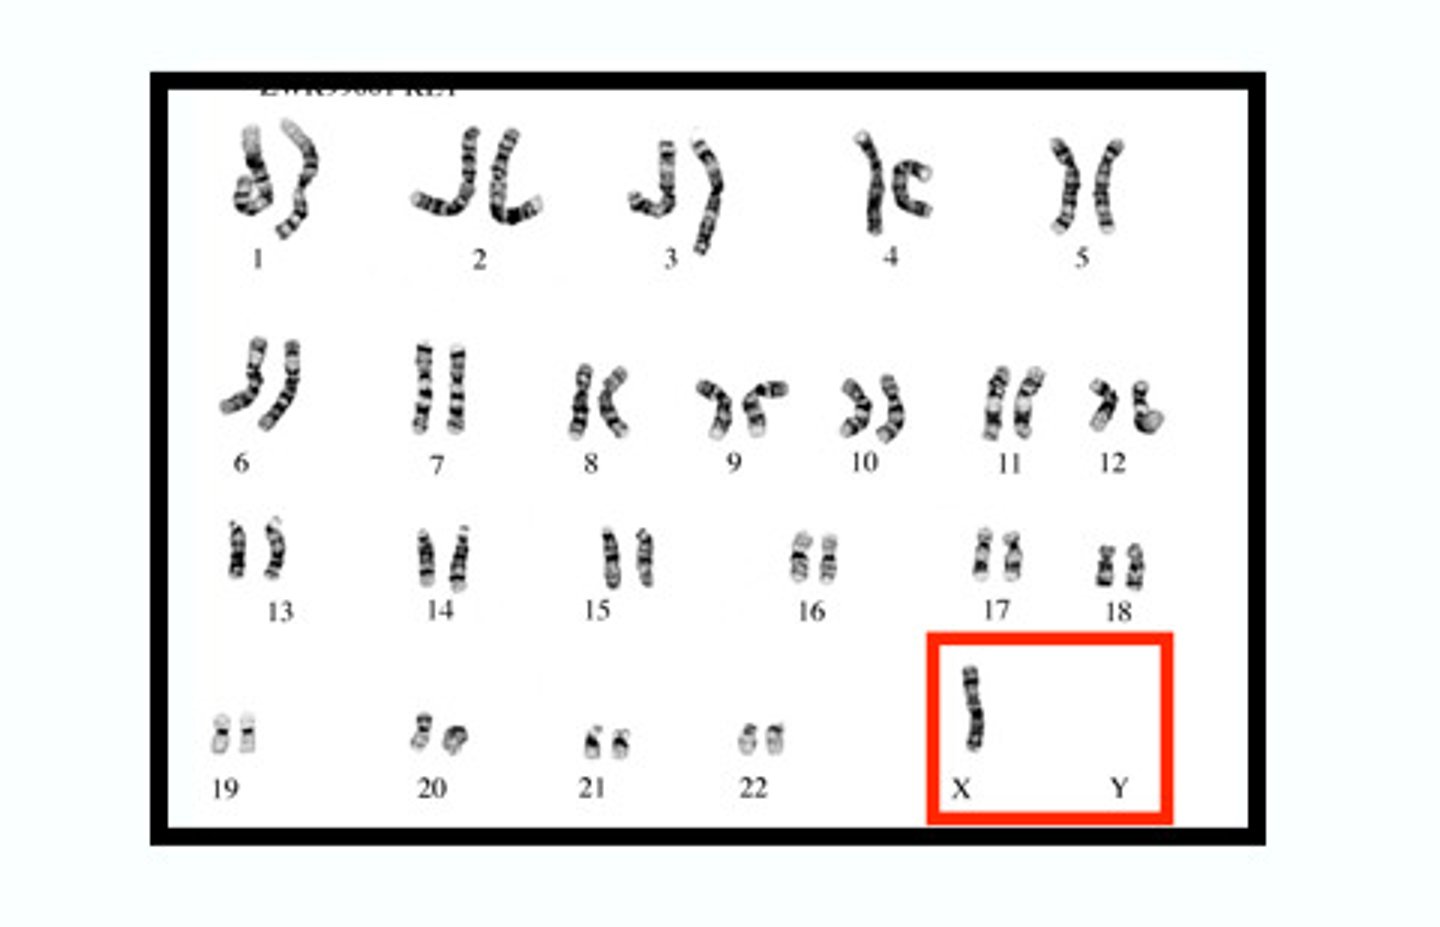 <p>missing a chromosome</p>